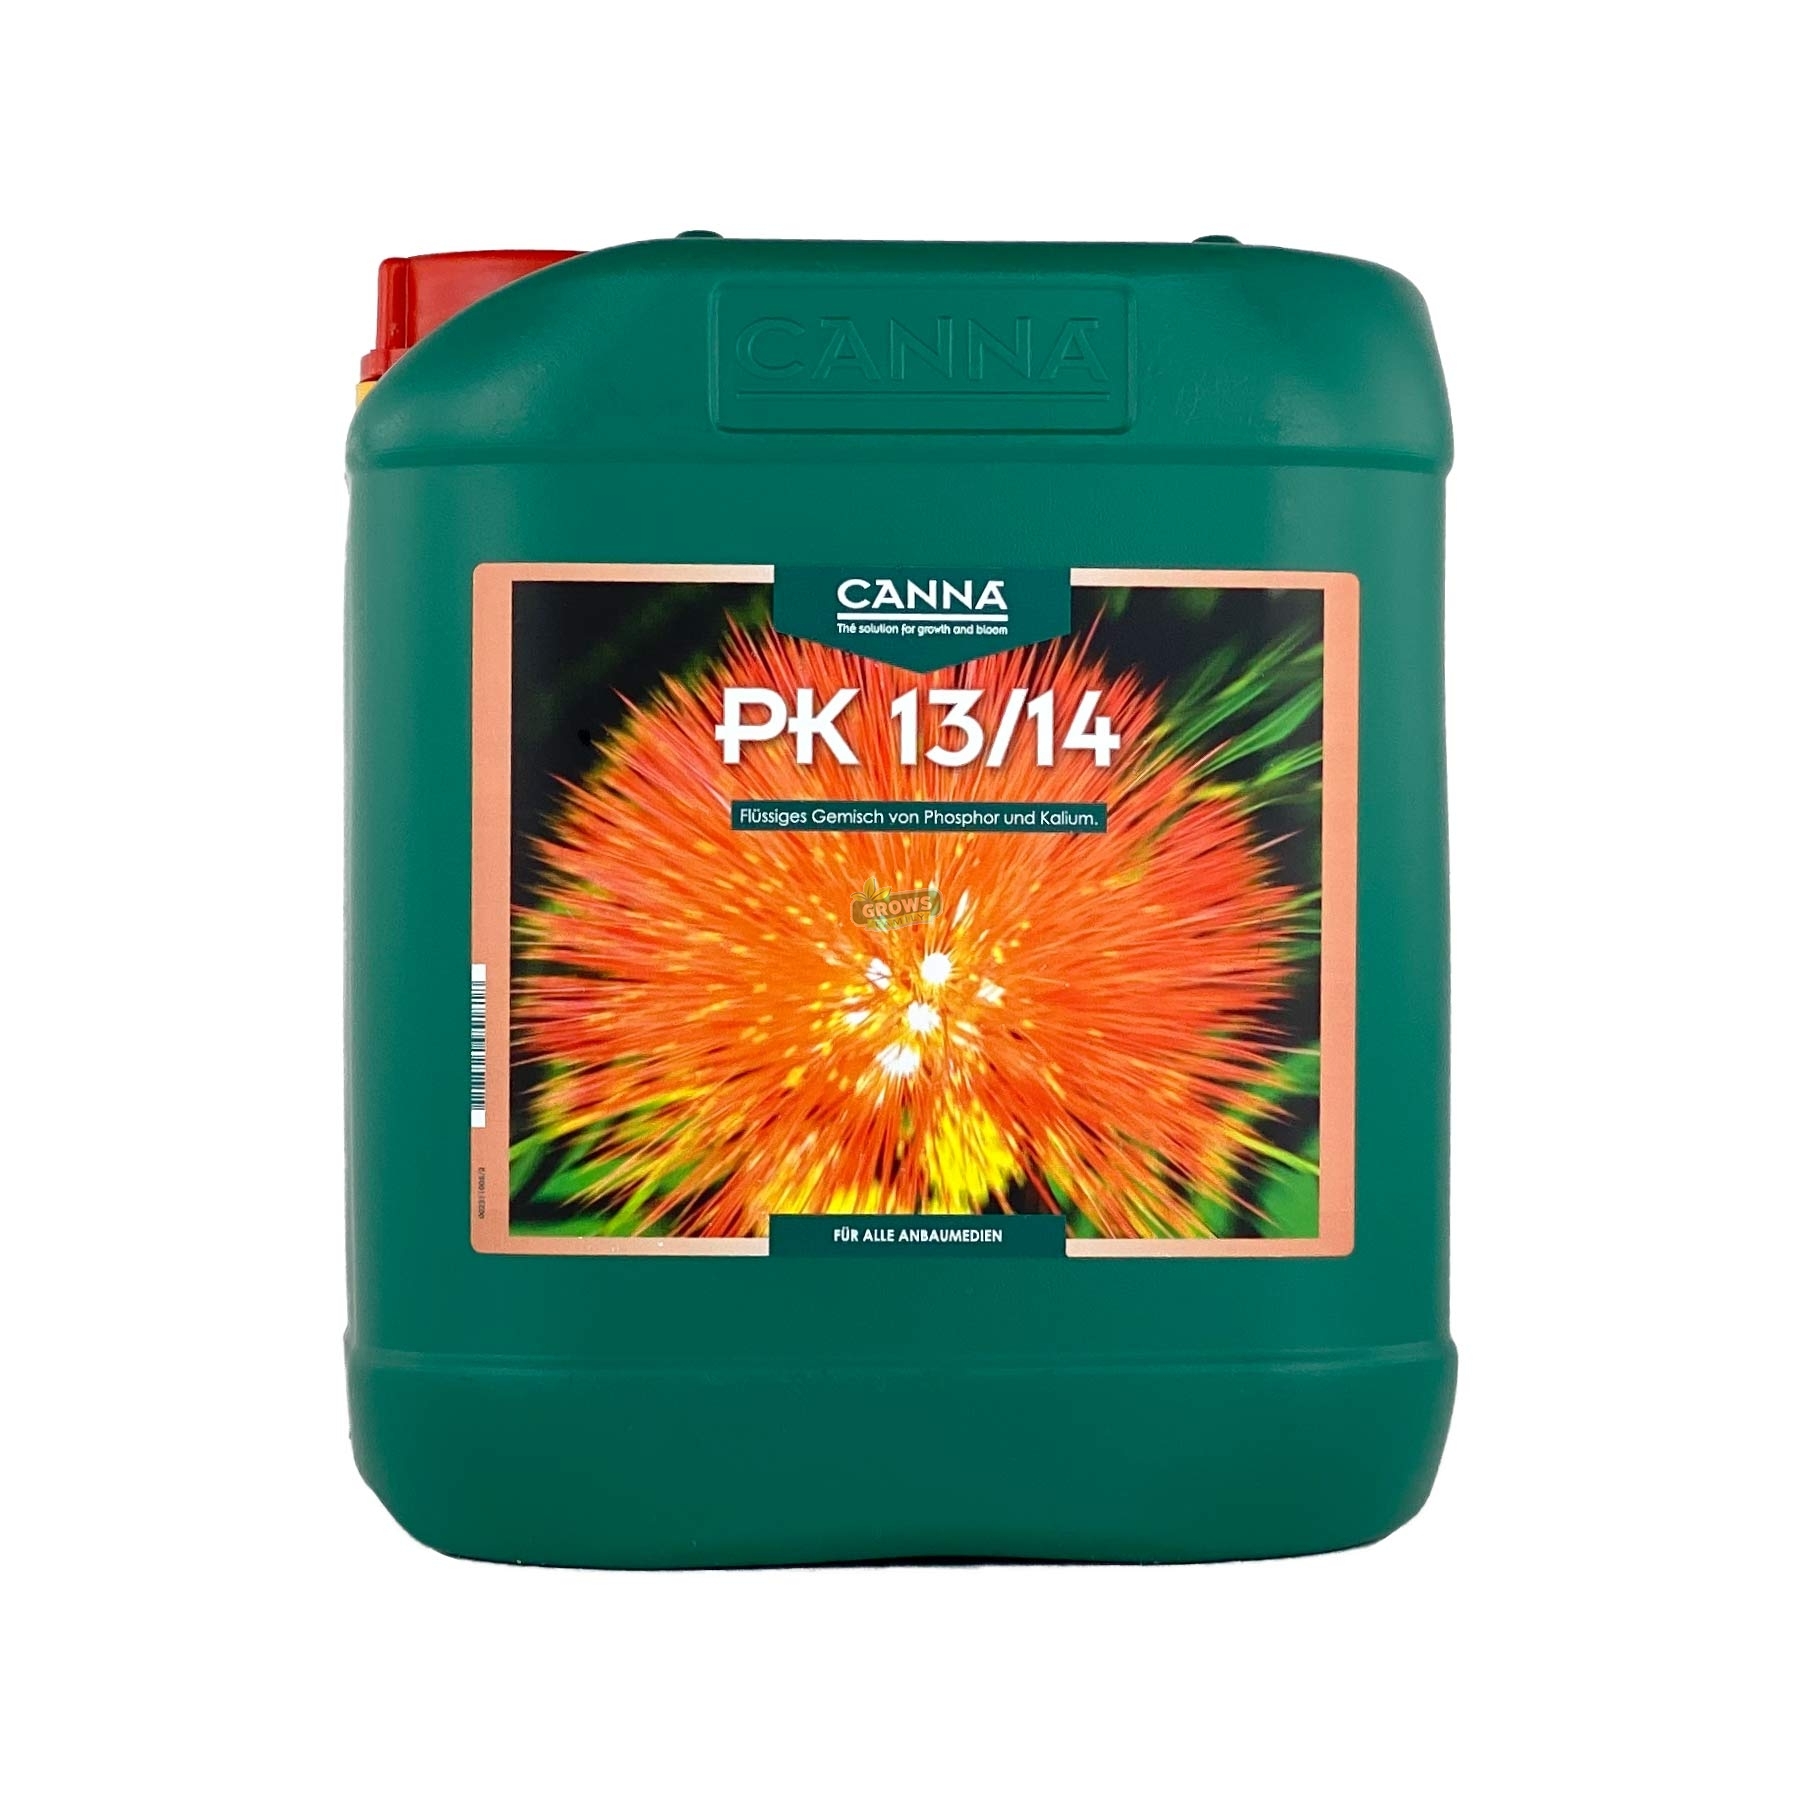 Canna PK 13/14 5 litre